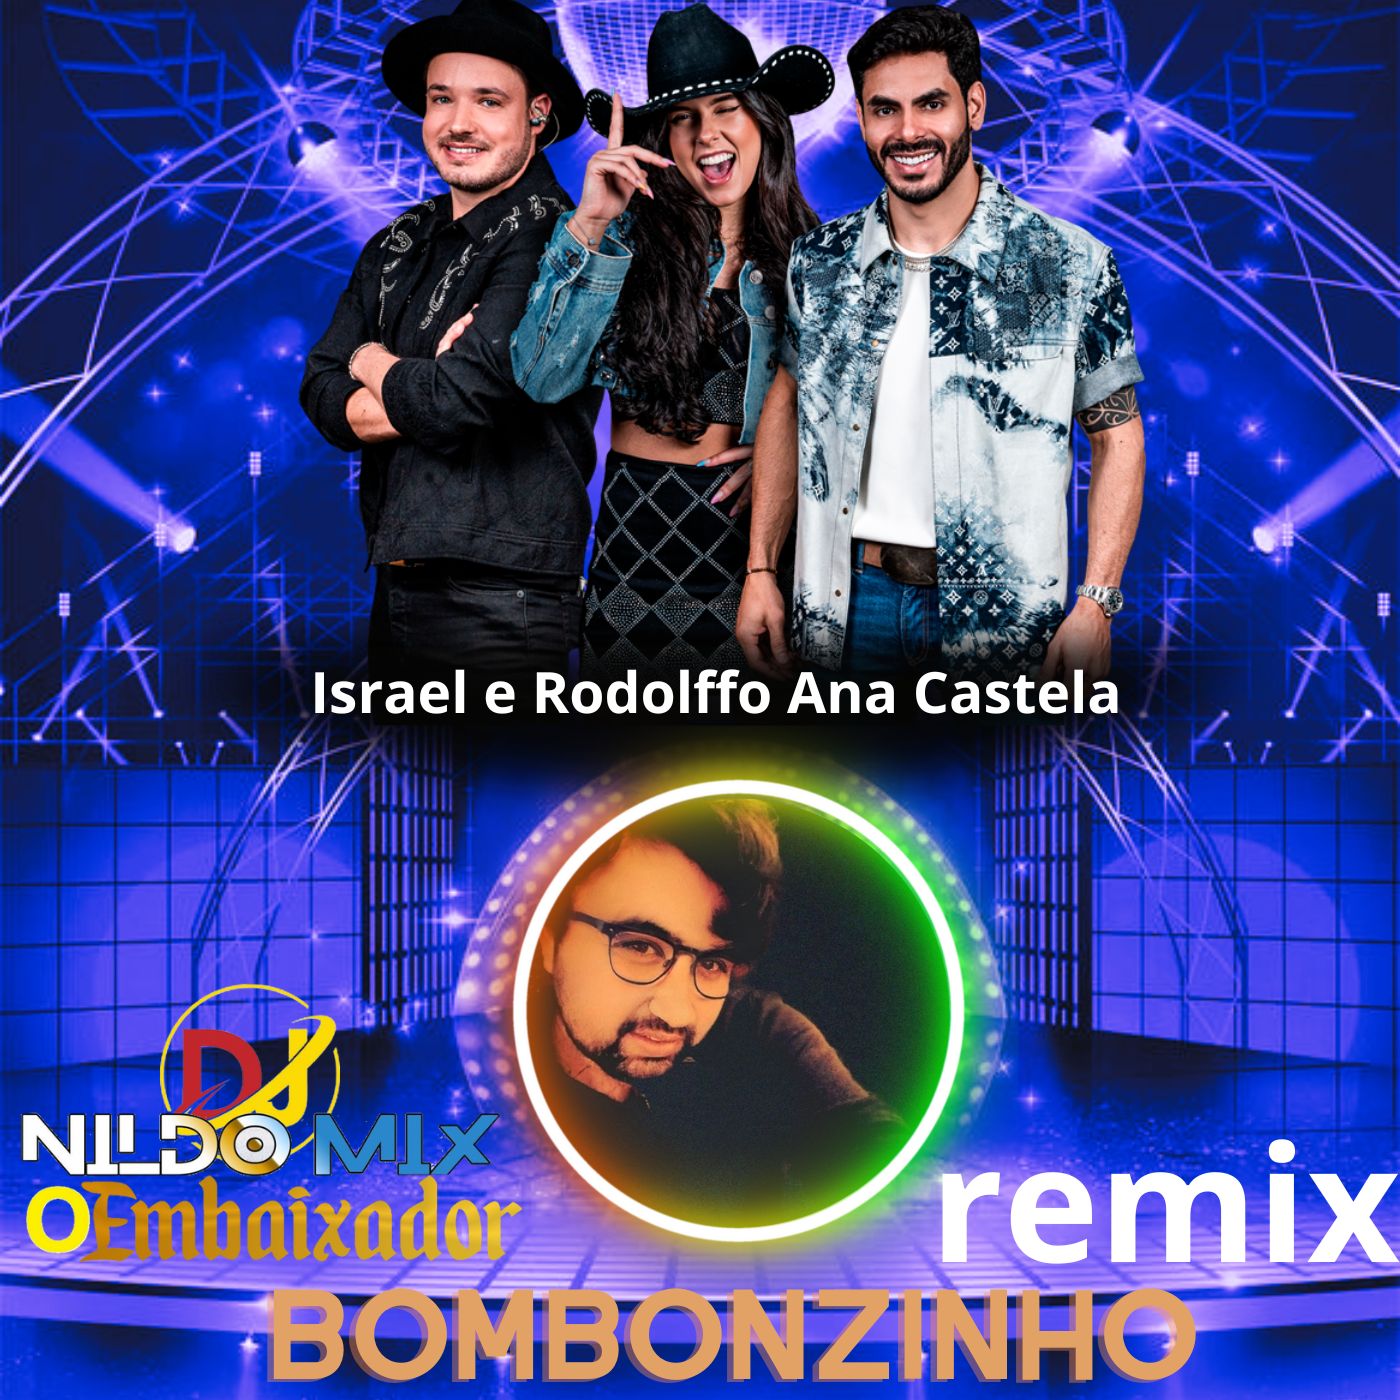 Israel e Rodolffo Ana Castela  Bombonzinho REMIX DJ NILDO MIX